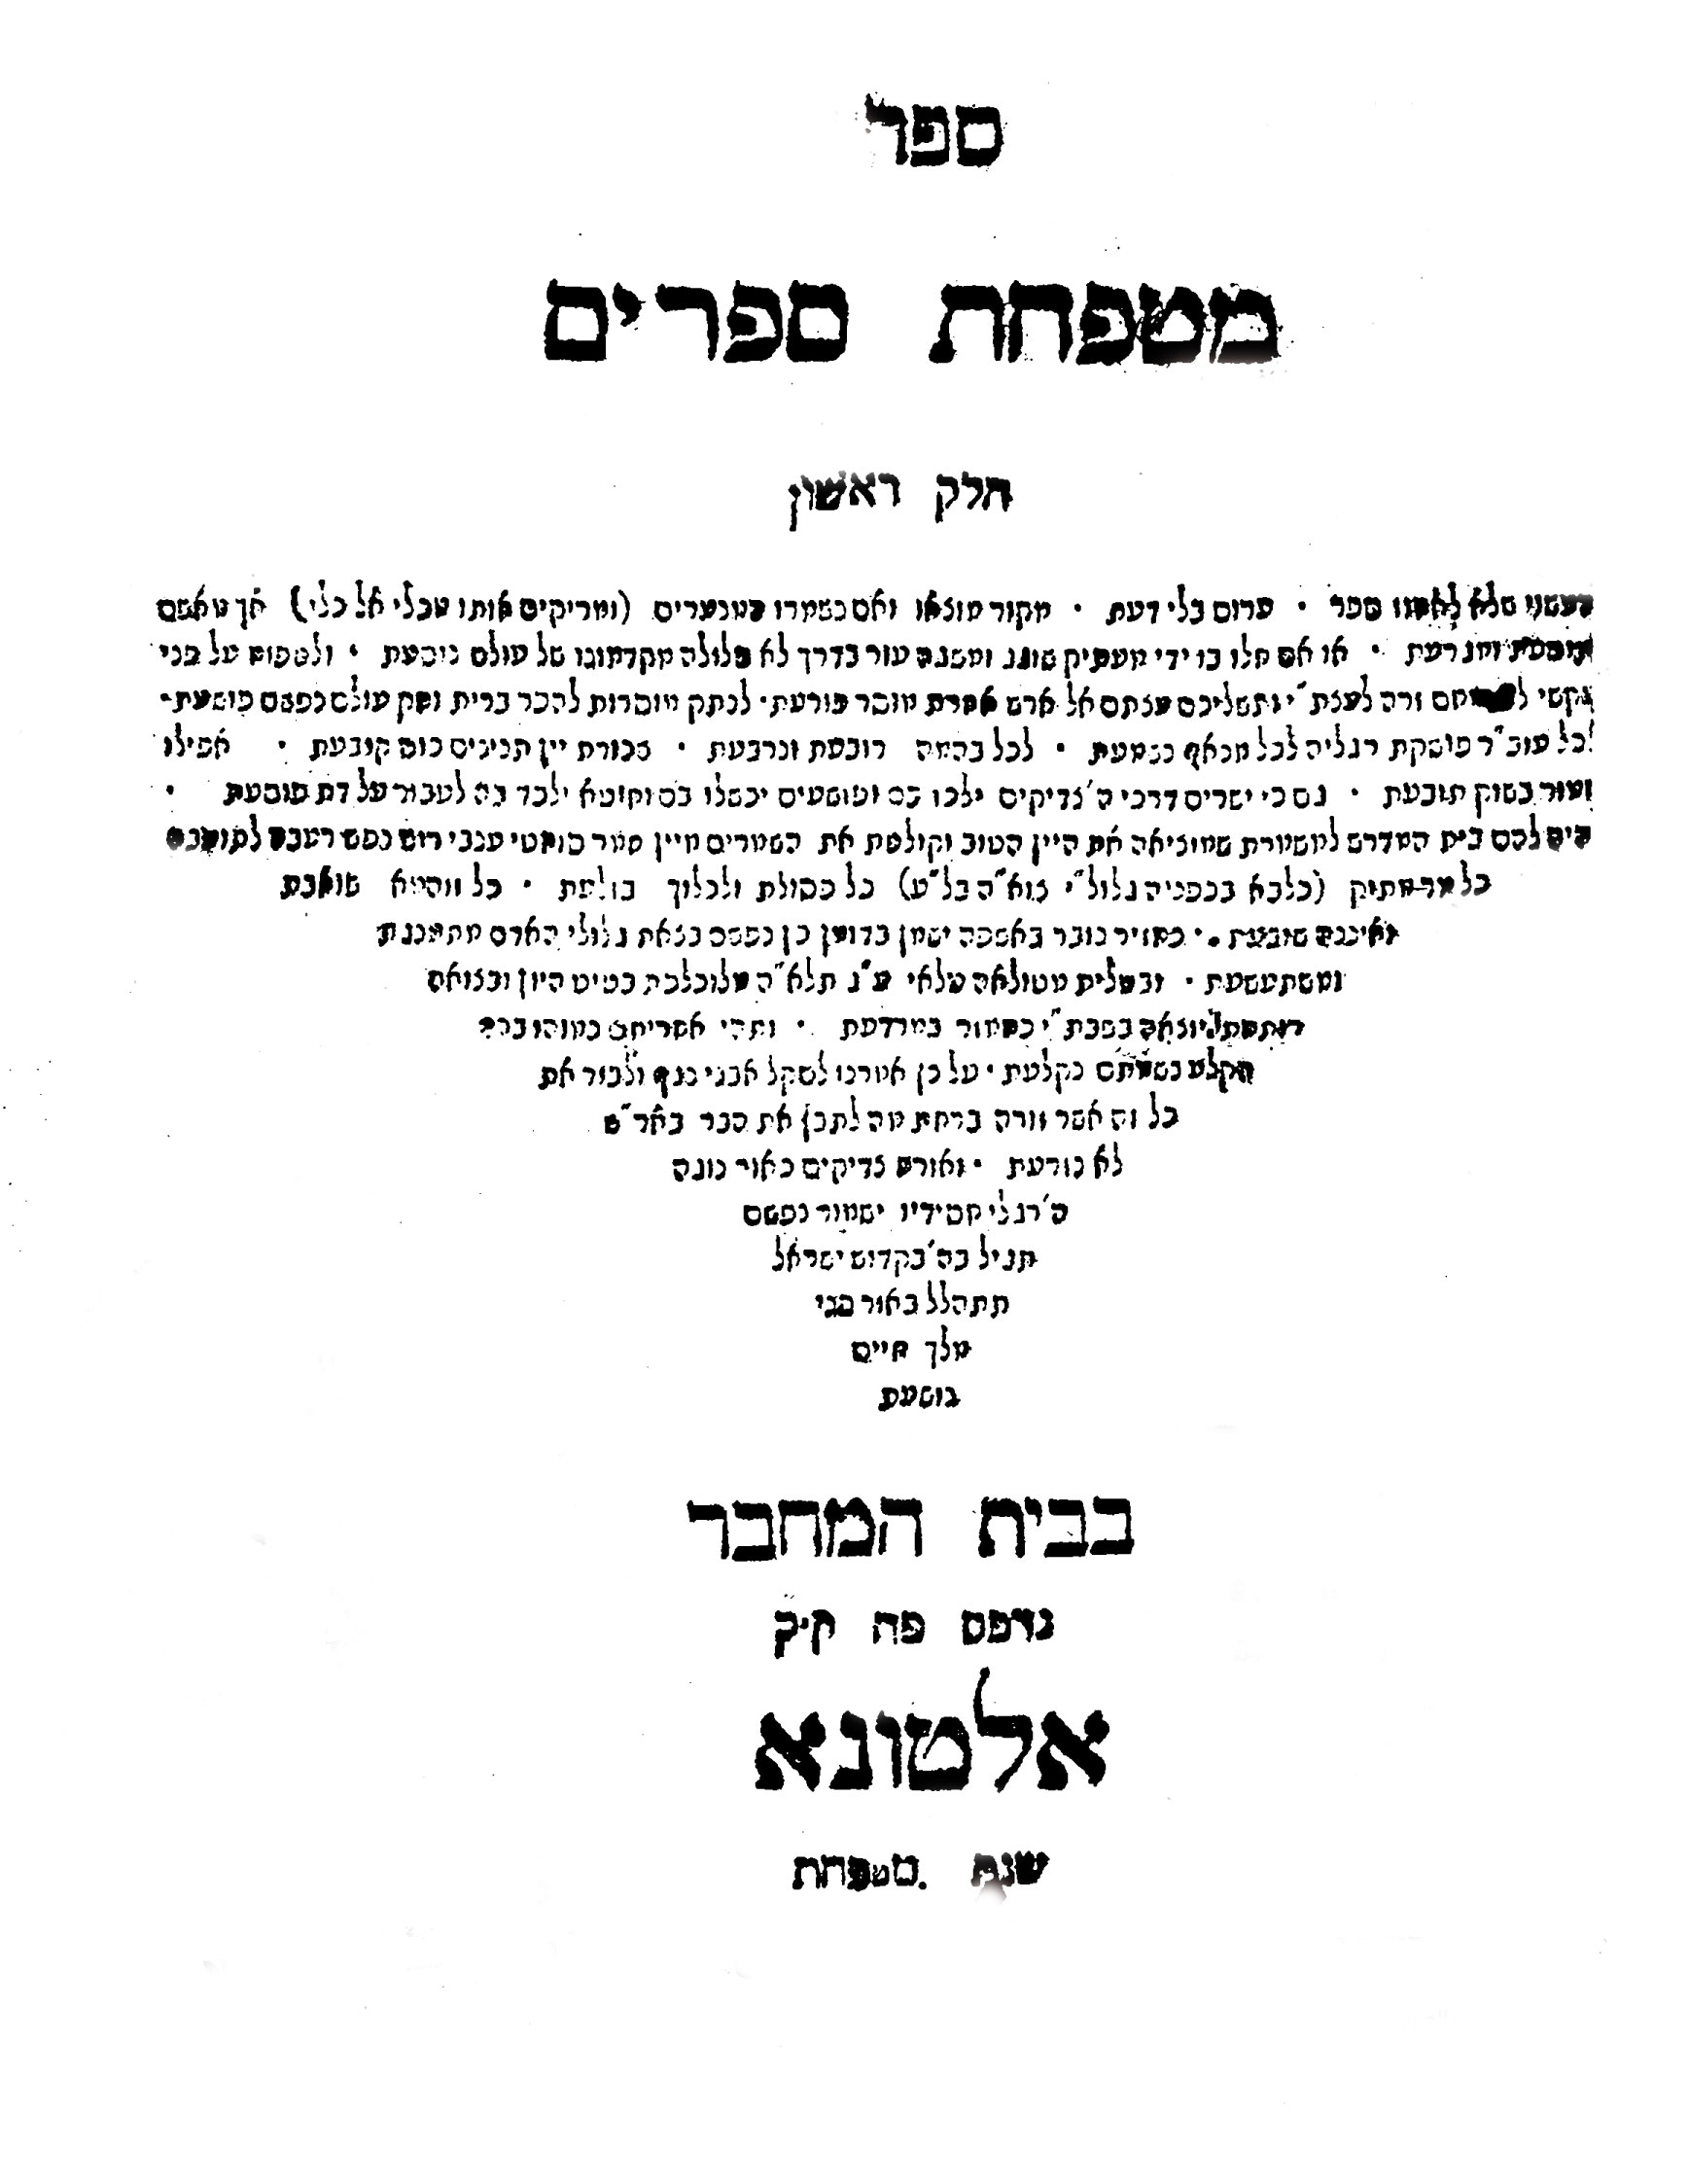 Mitpahat Sefarim, Rabbi Jacob Emden’s criticism of the Zohar, was published in Altuna in 1798